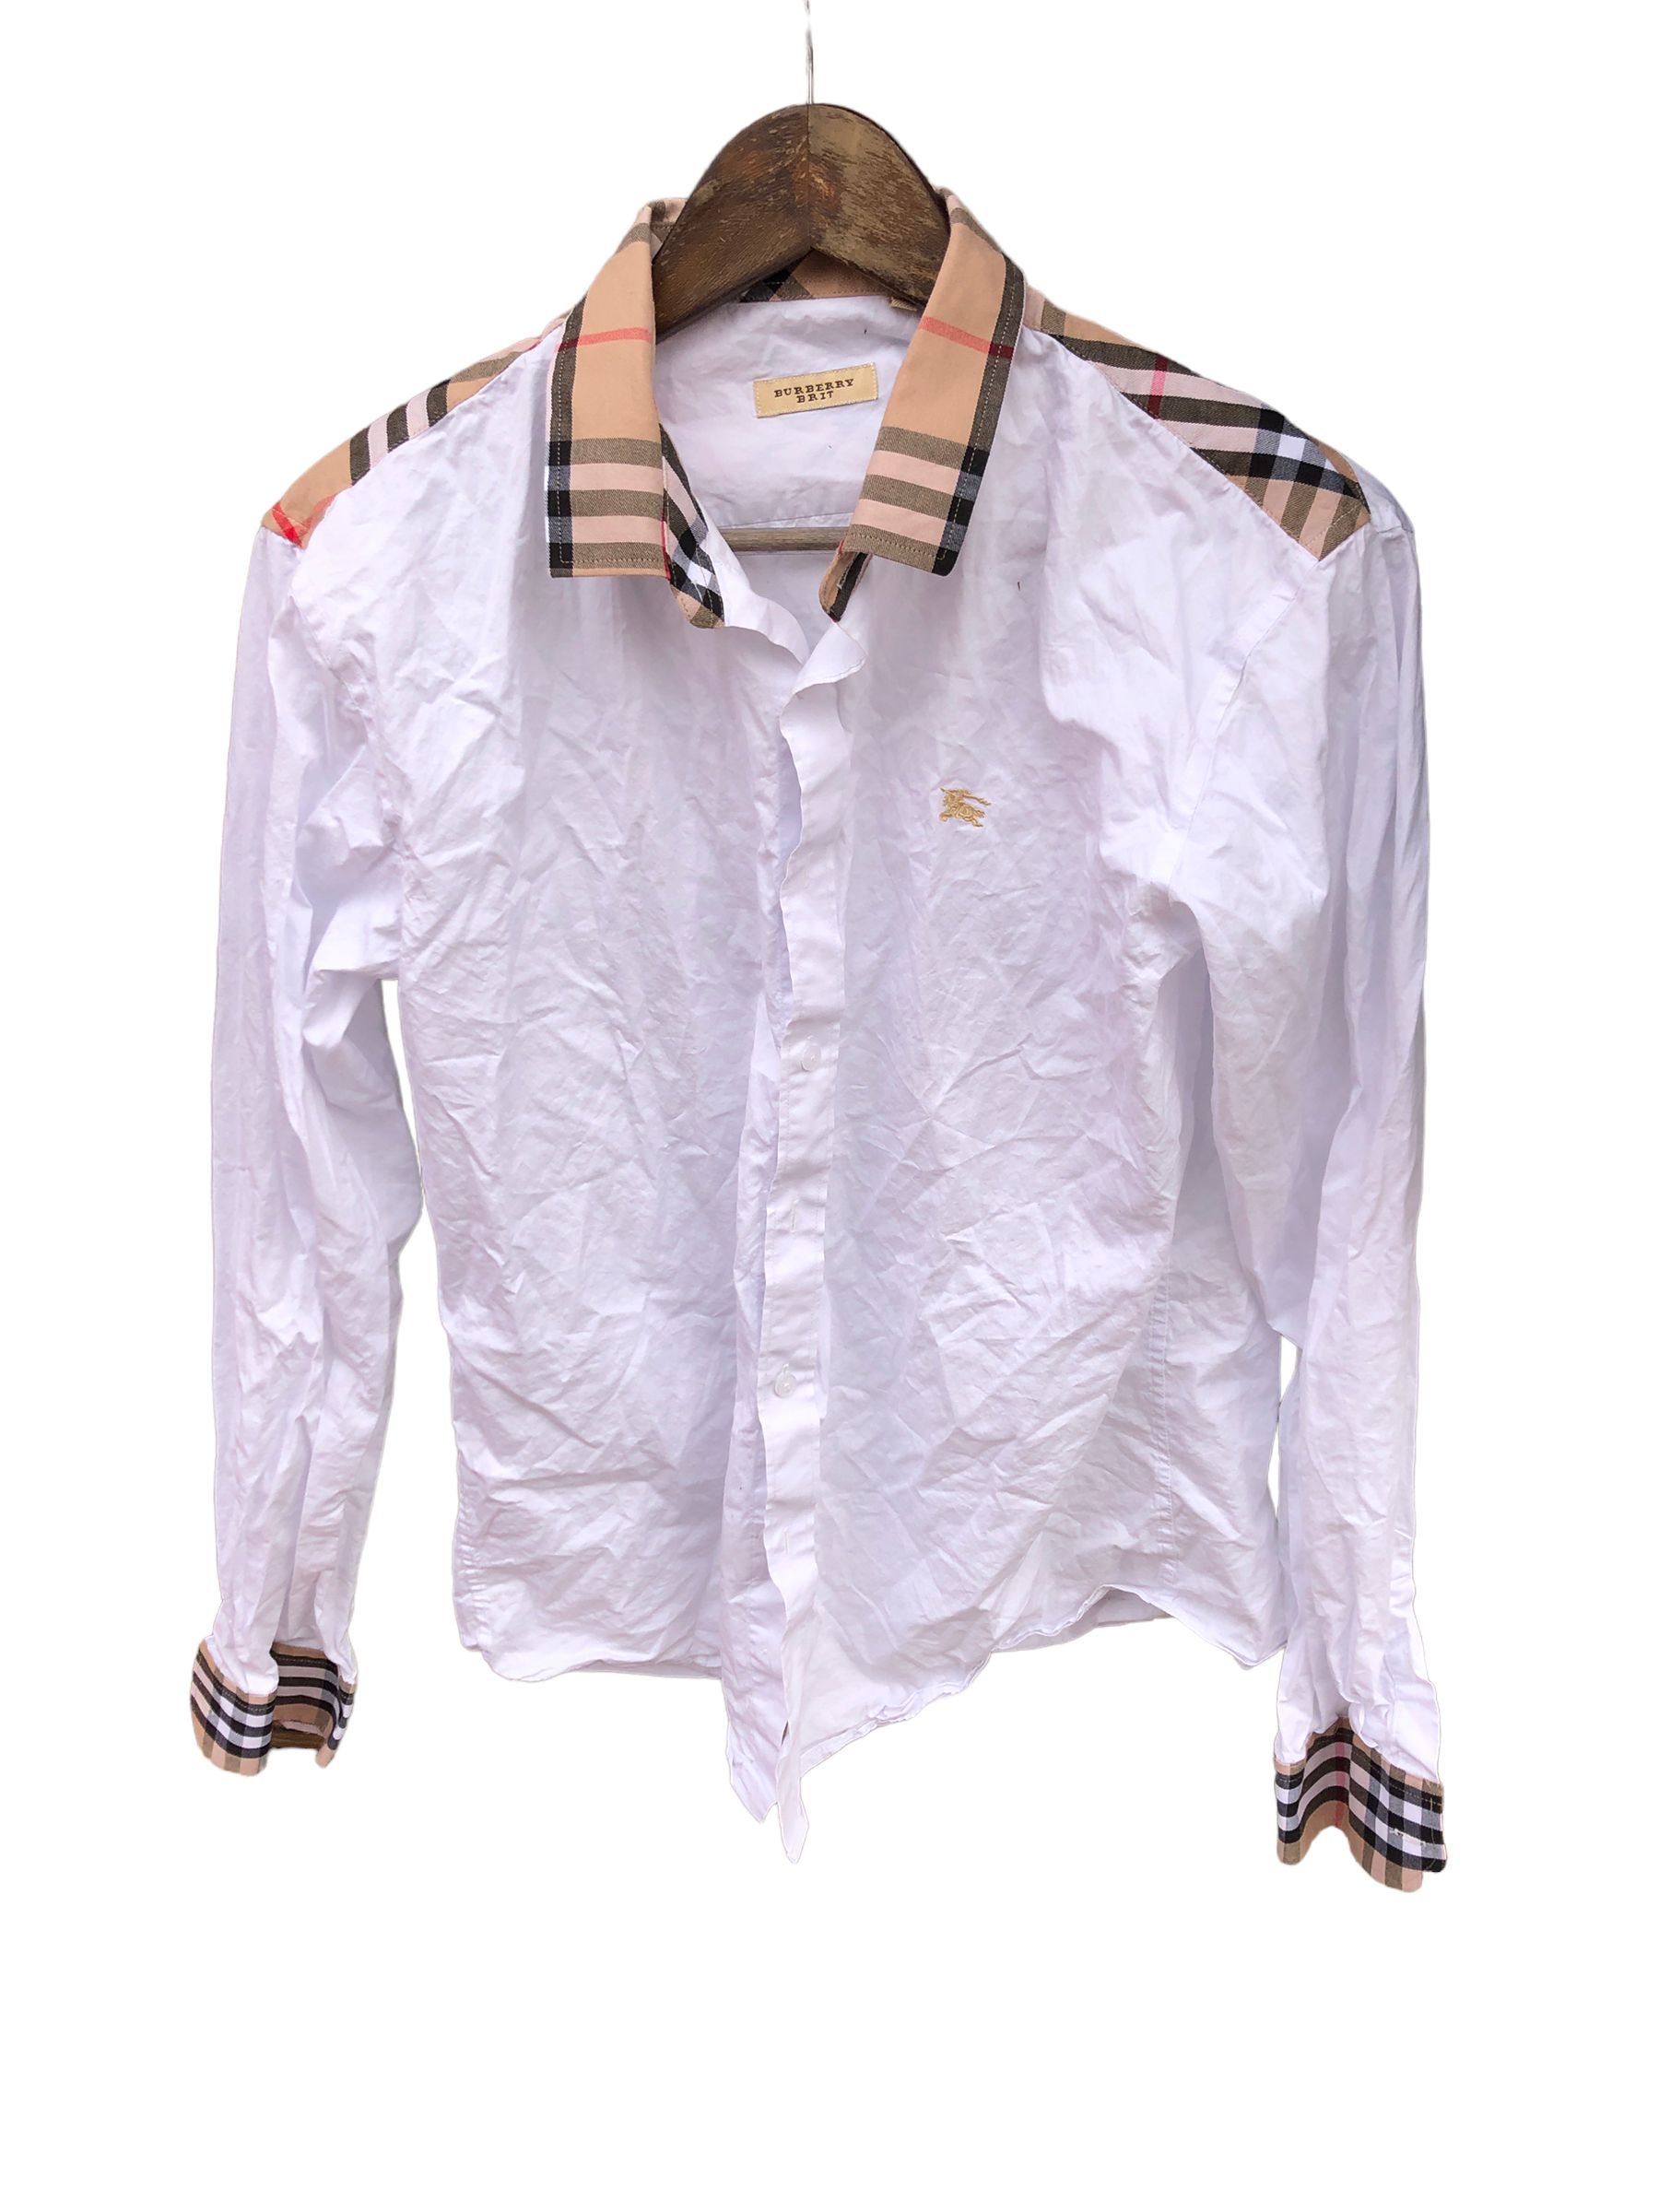 Vintage Vintage Burberry Shirt Large White Big Logo Size US L / EU 52-54 / 3 - 6 Thumbnail